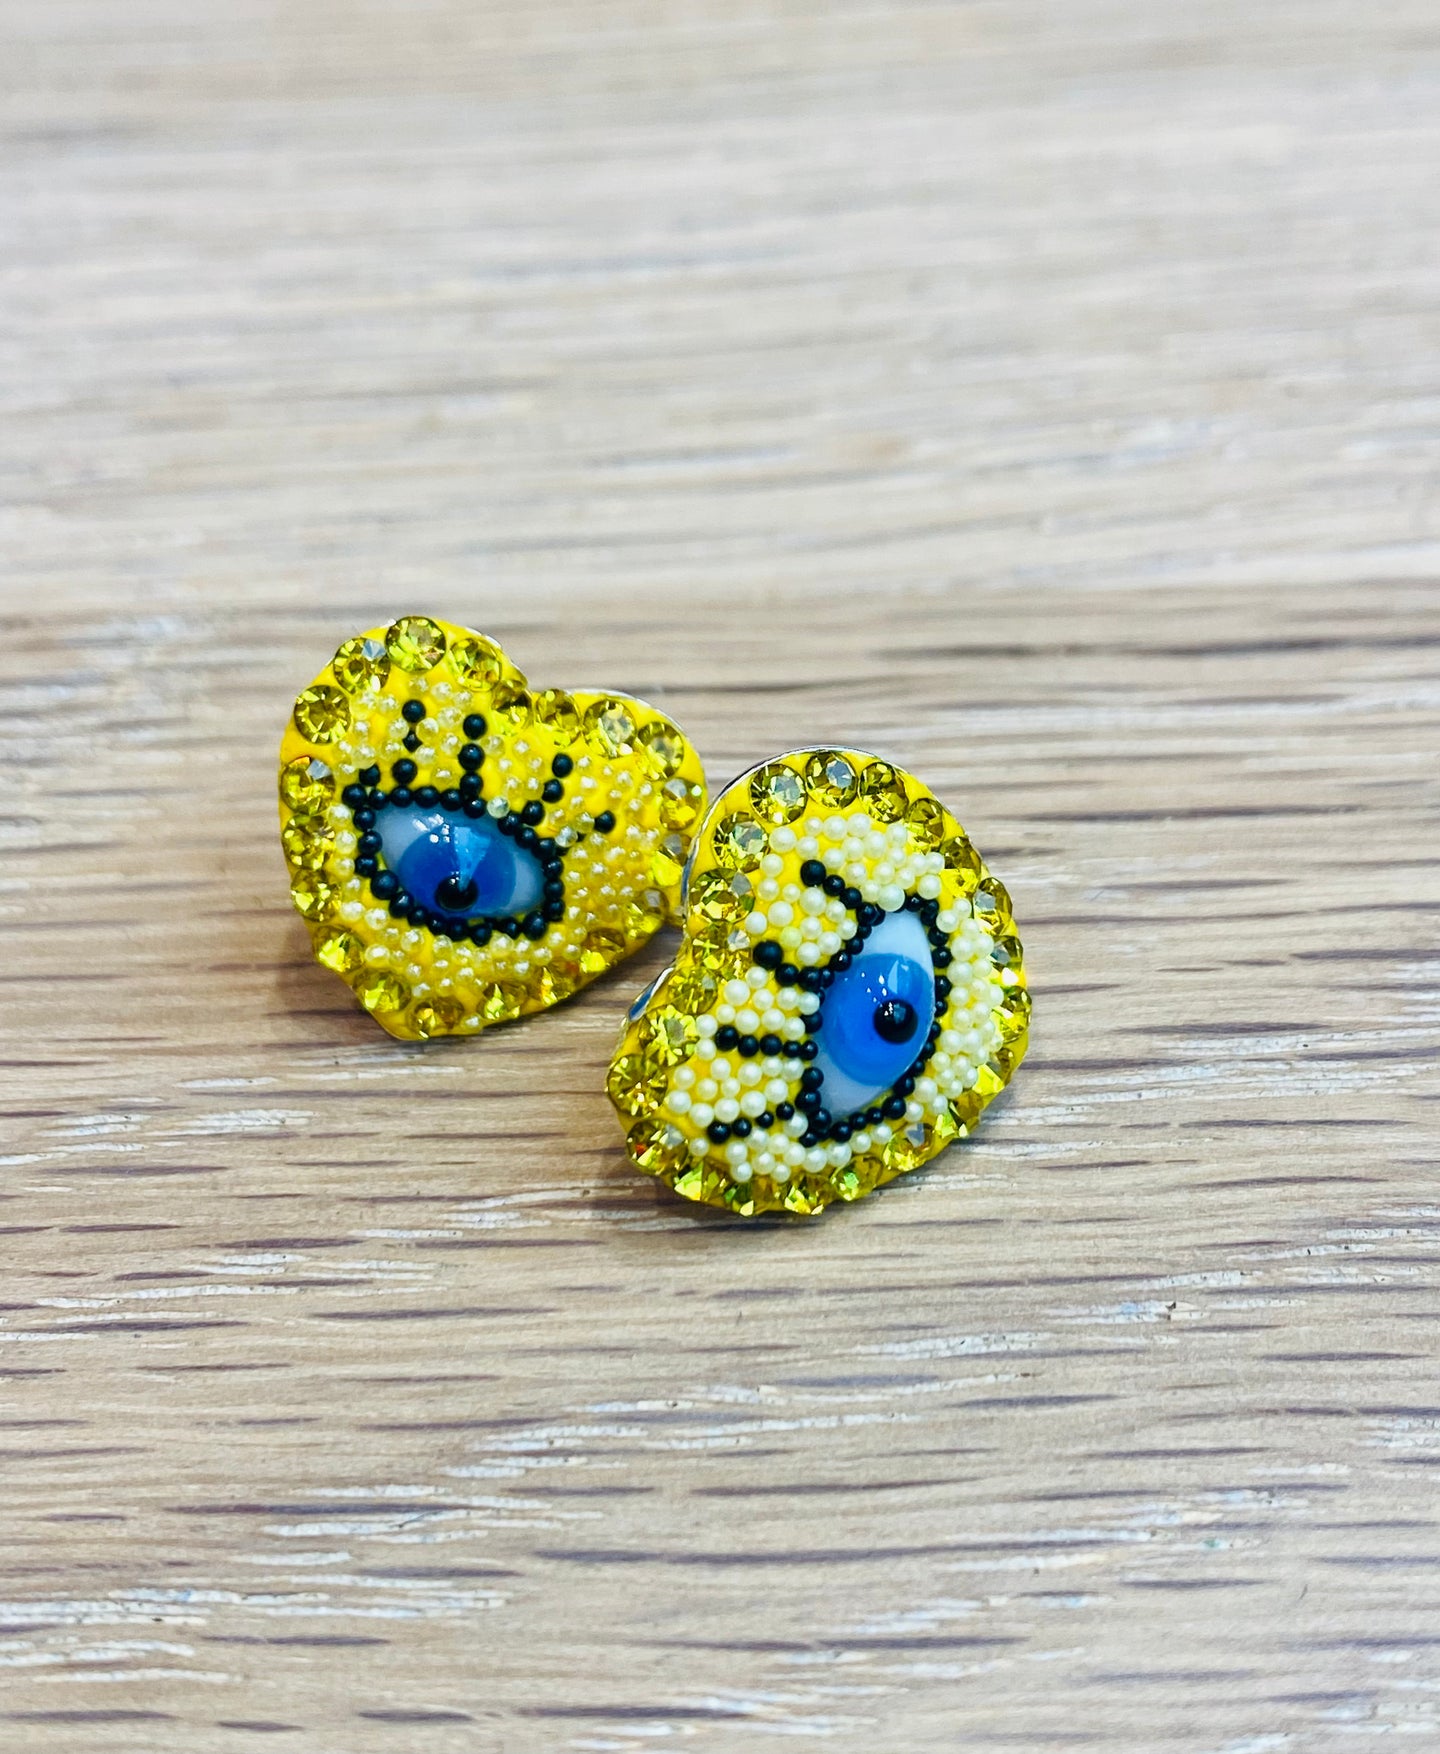 Mexican Evil Eye rhinestone earrings